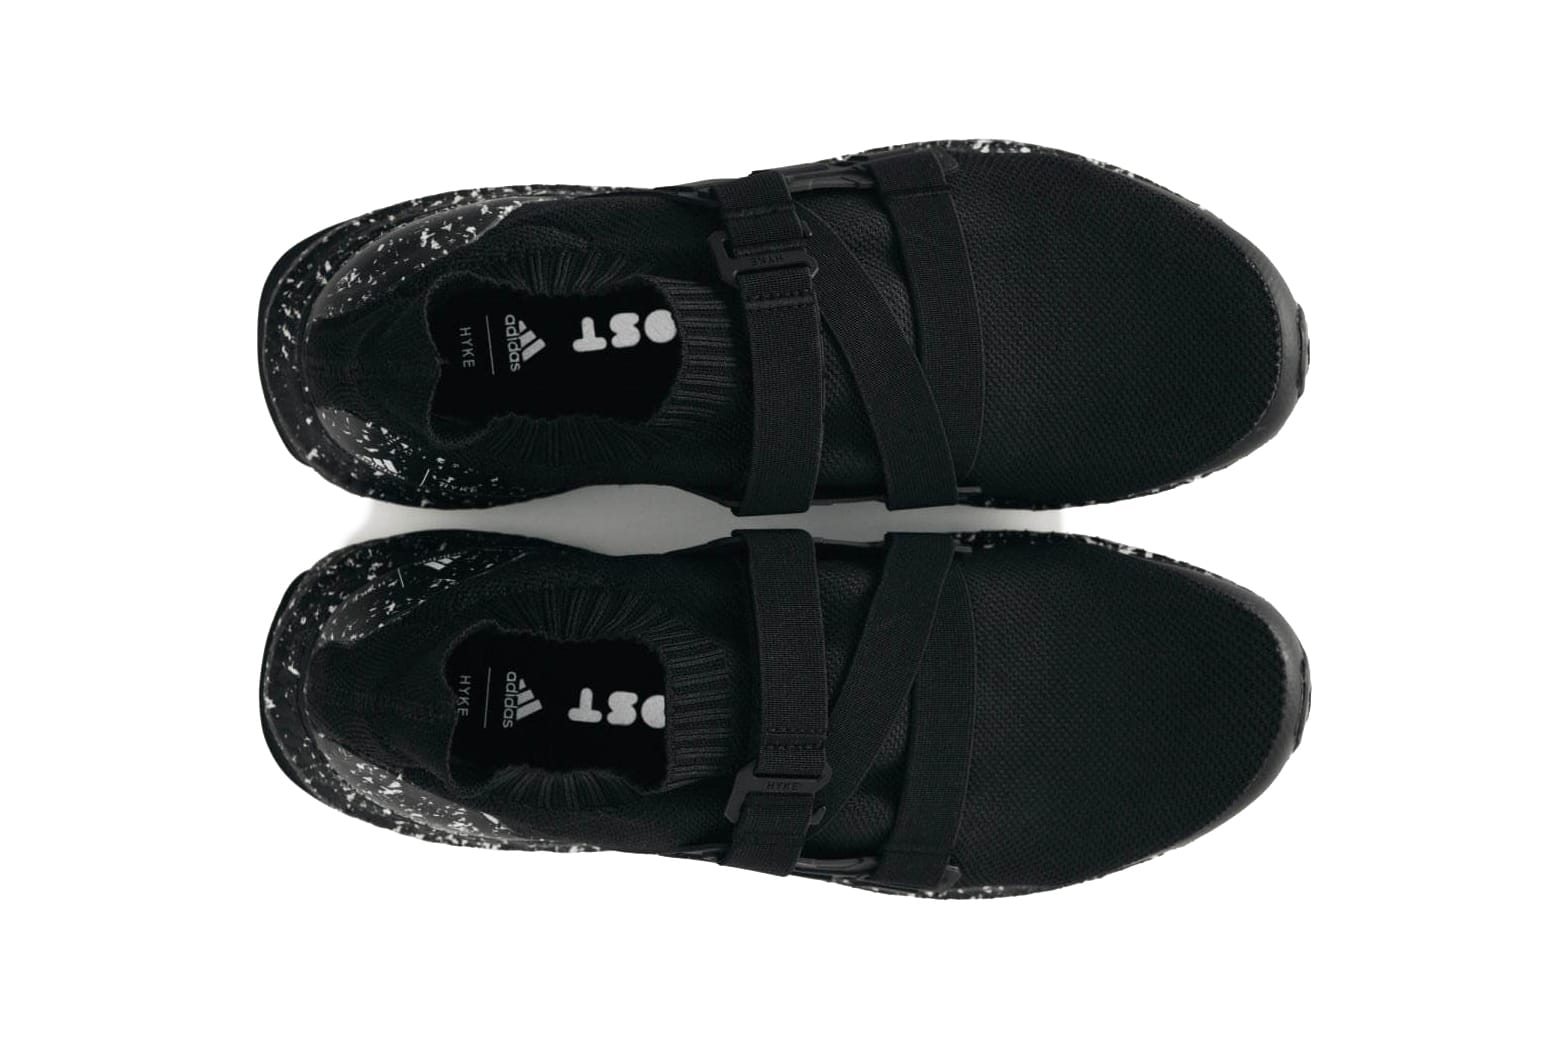 HYKE x adidas Originals SS20 Apparel, Sneaker Collab | HYPEBEAST